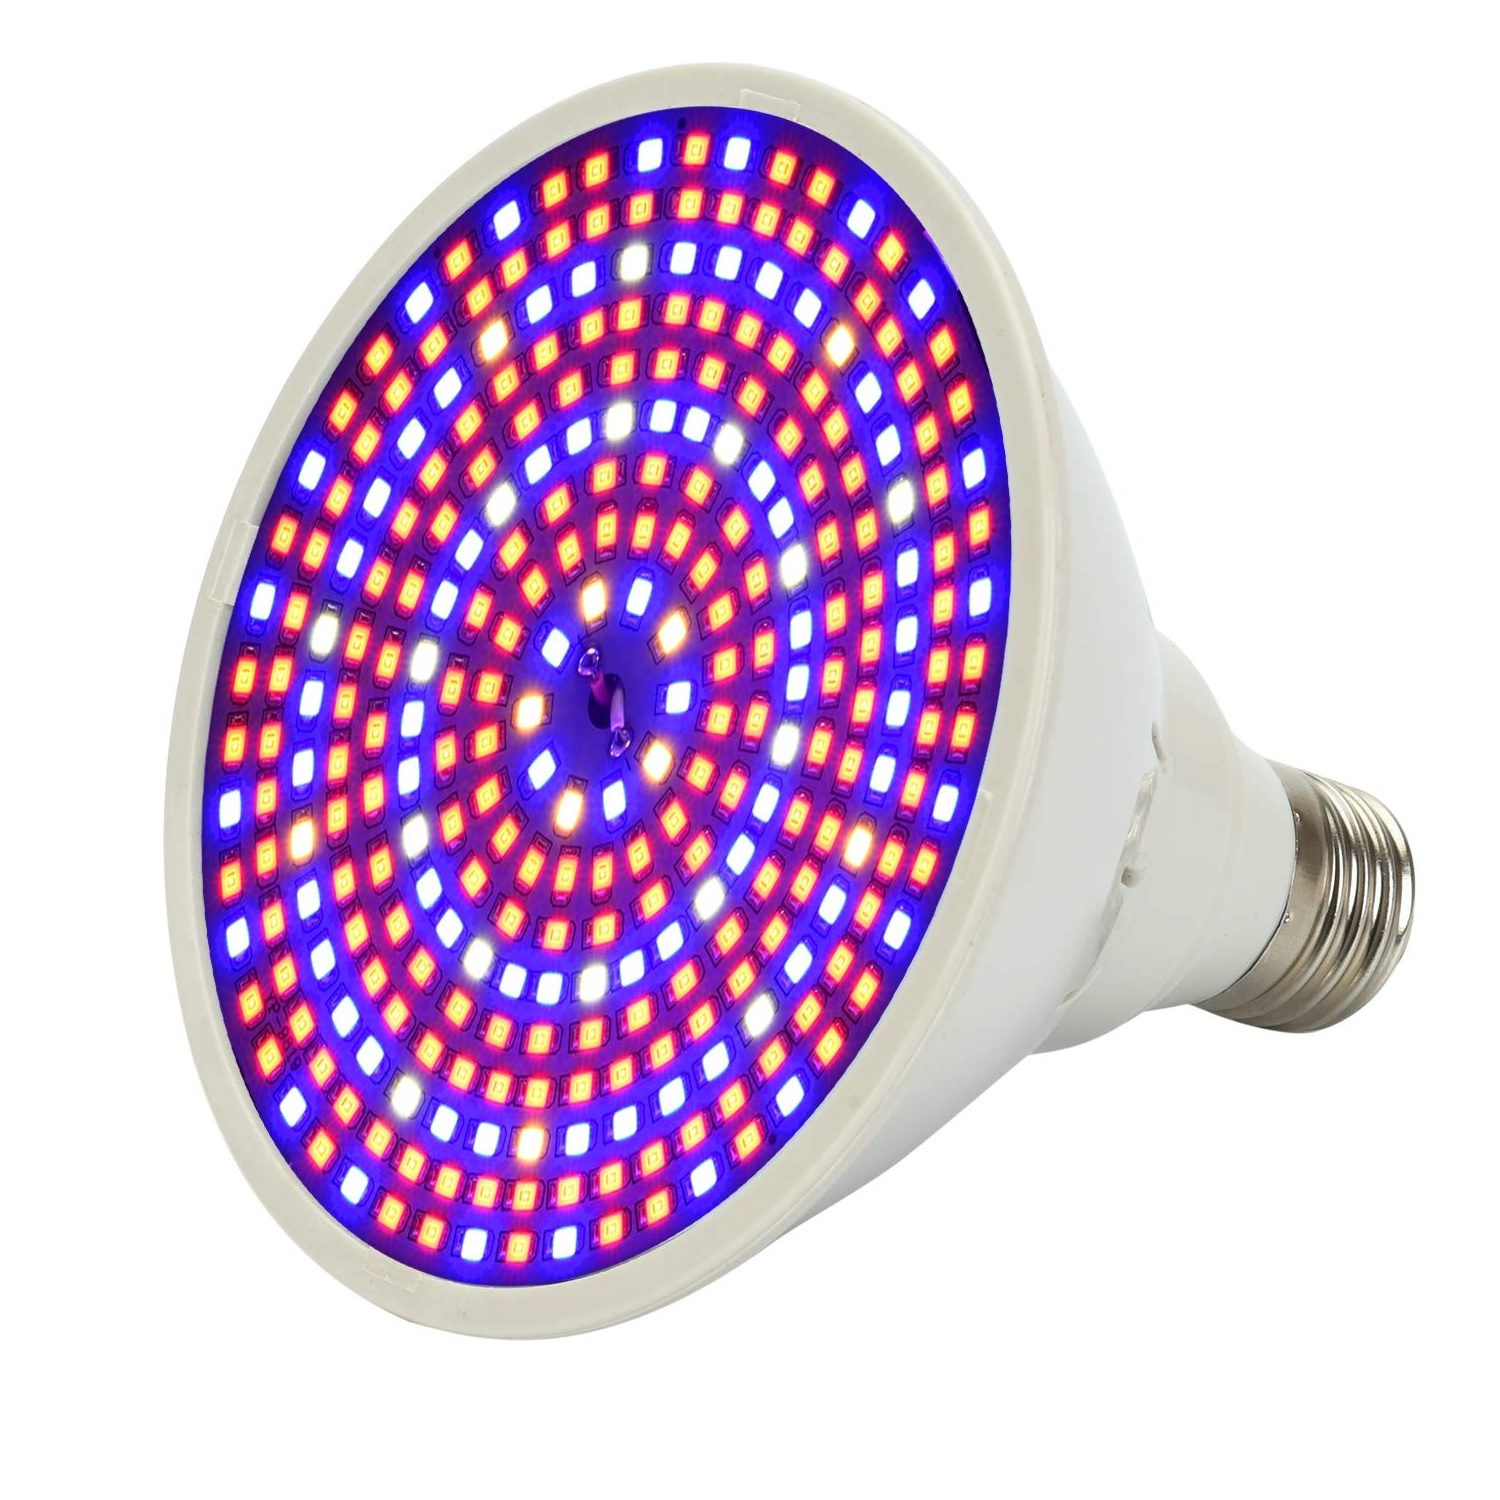 Wiskundige Begrip Afdaling Led Kweeklamp - Groeilamp met E27 fitting - 300 LEDs - Full Spectrum lamp  met grote fitting - LedlampshopXL